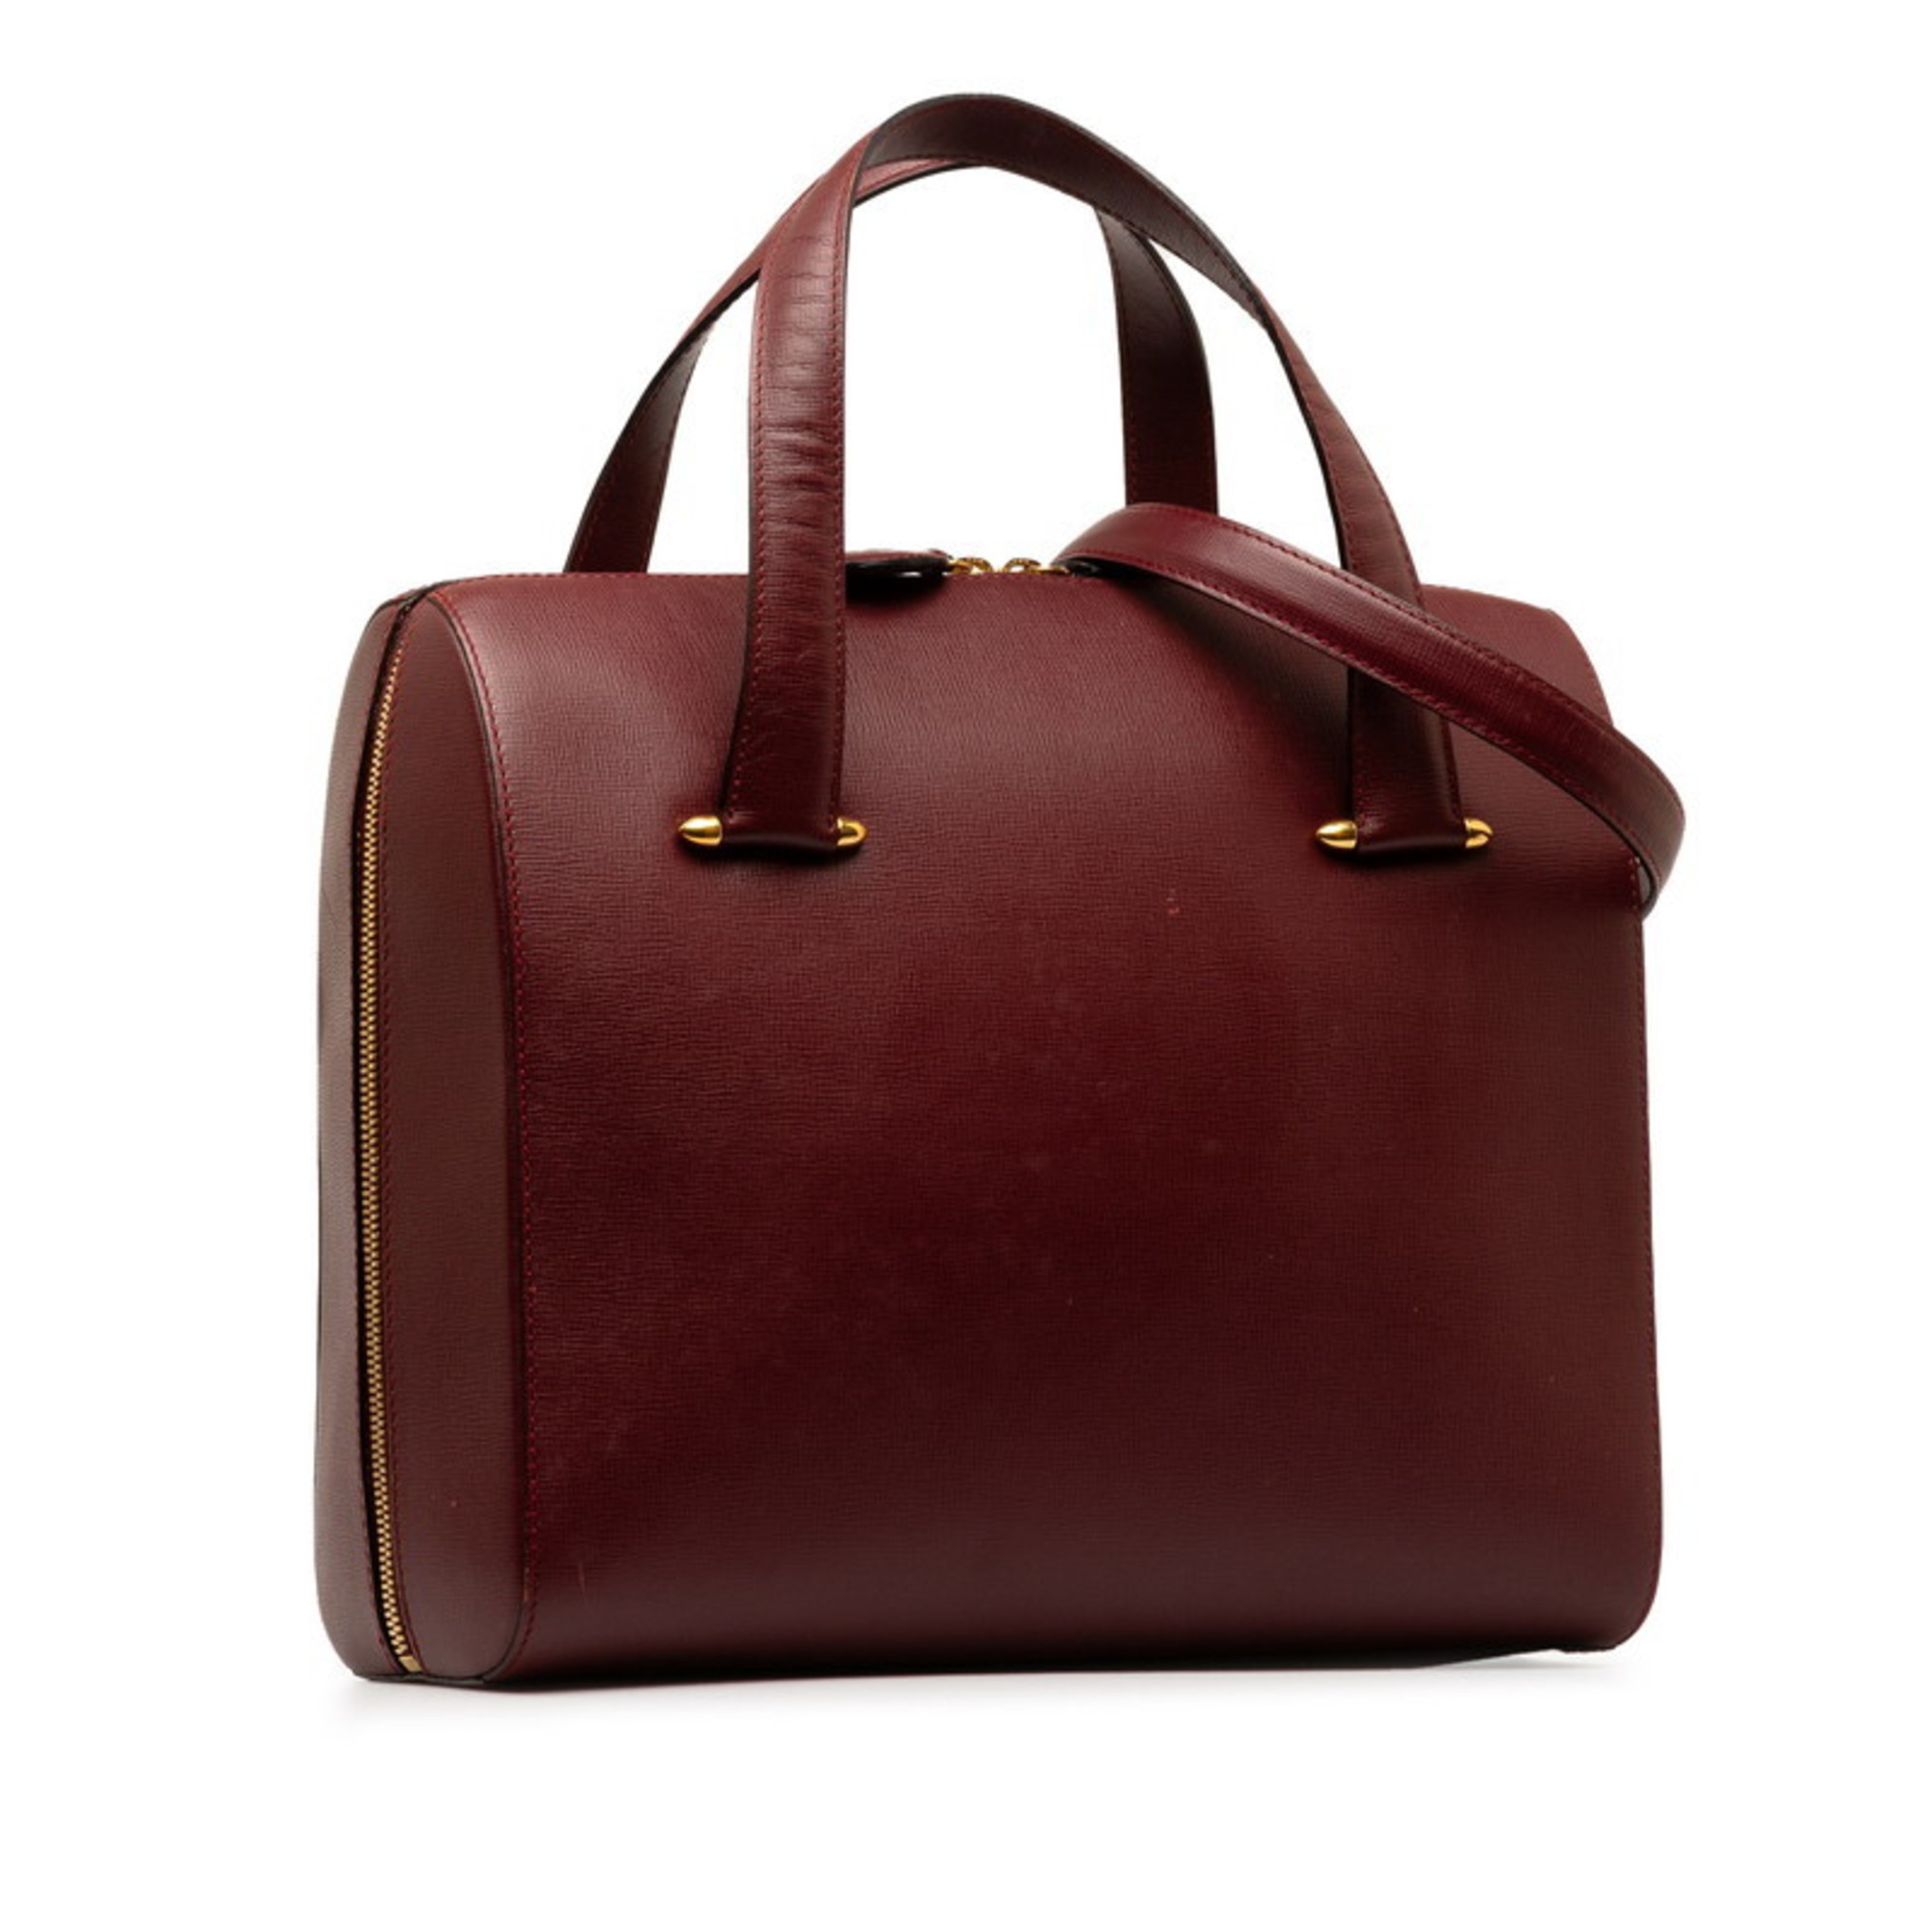 Cartier Must Line Handbag Shoulder Bag Wine Red Bordeaux Leather Women's CARTIER